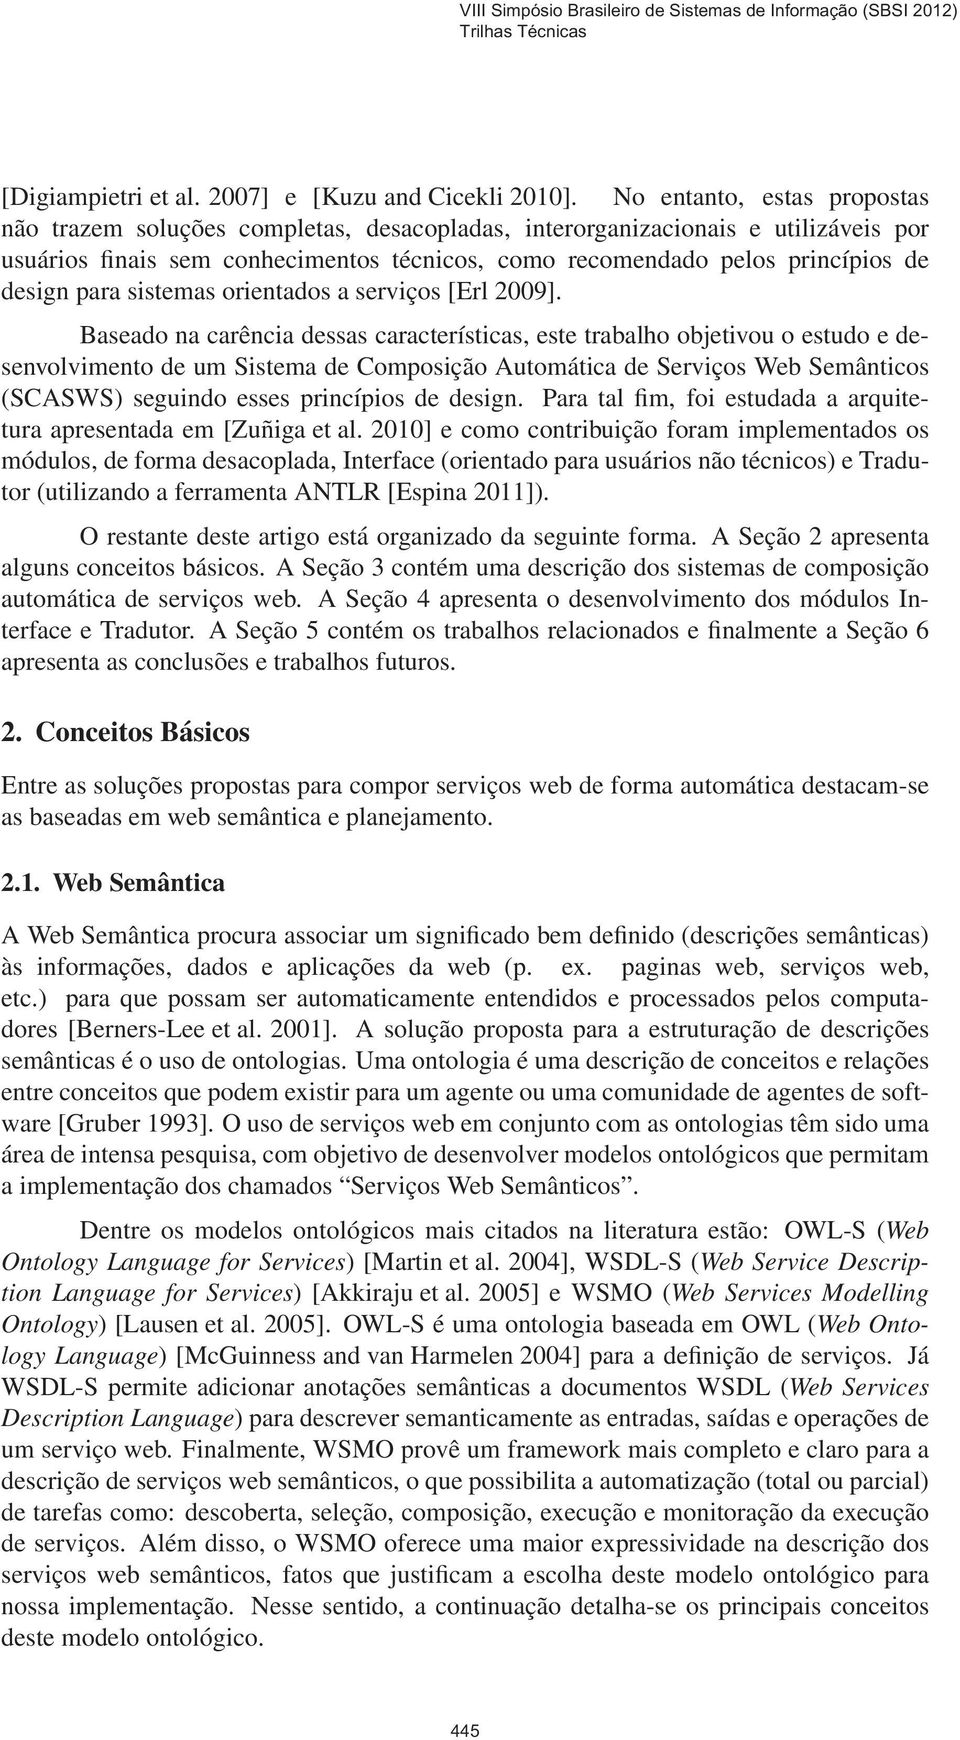 para sistemas orientados a serviços [Erl 2009].